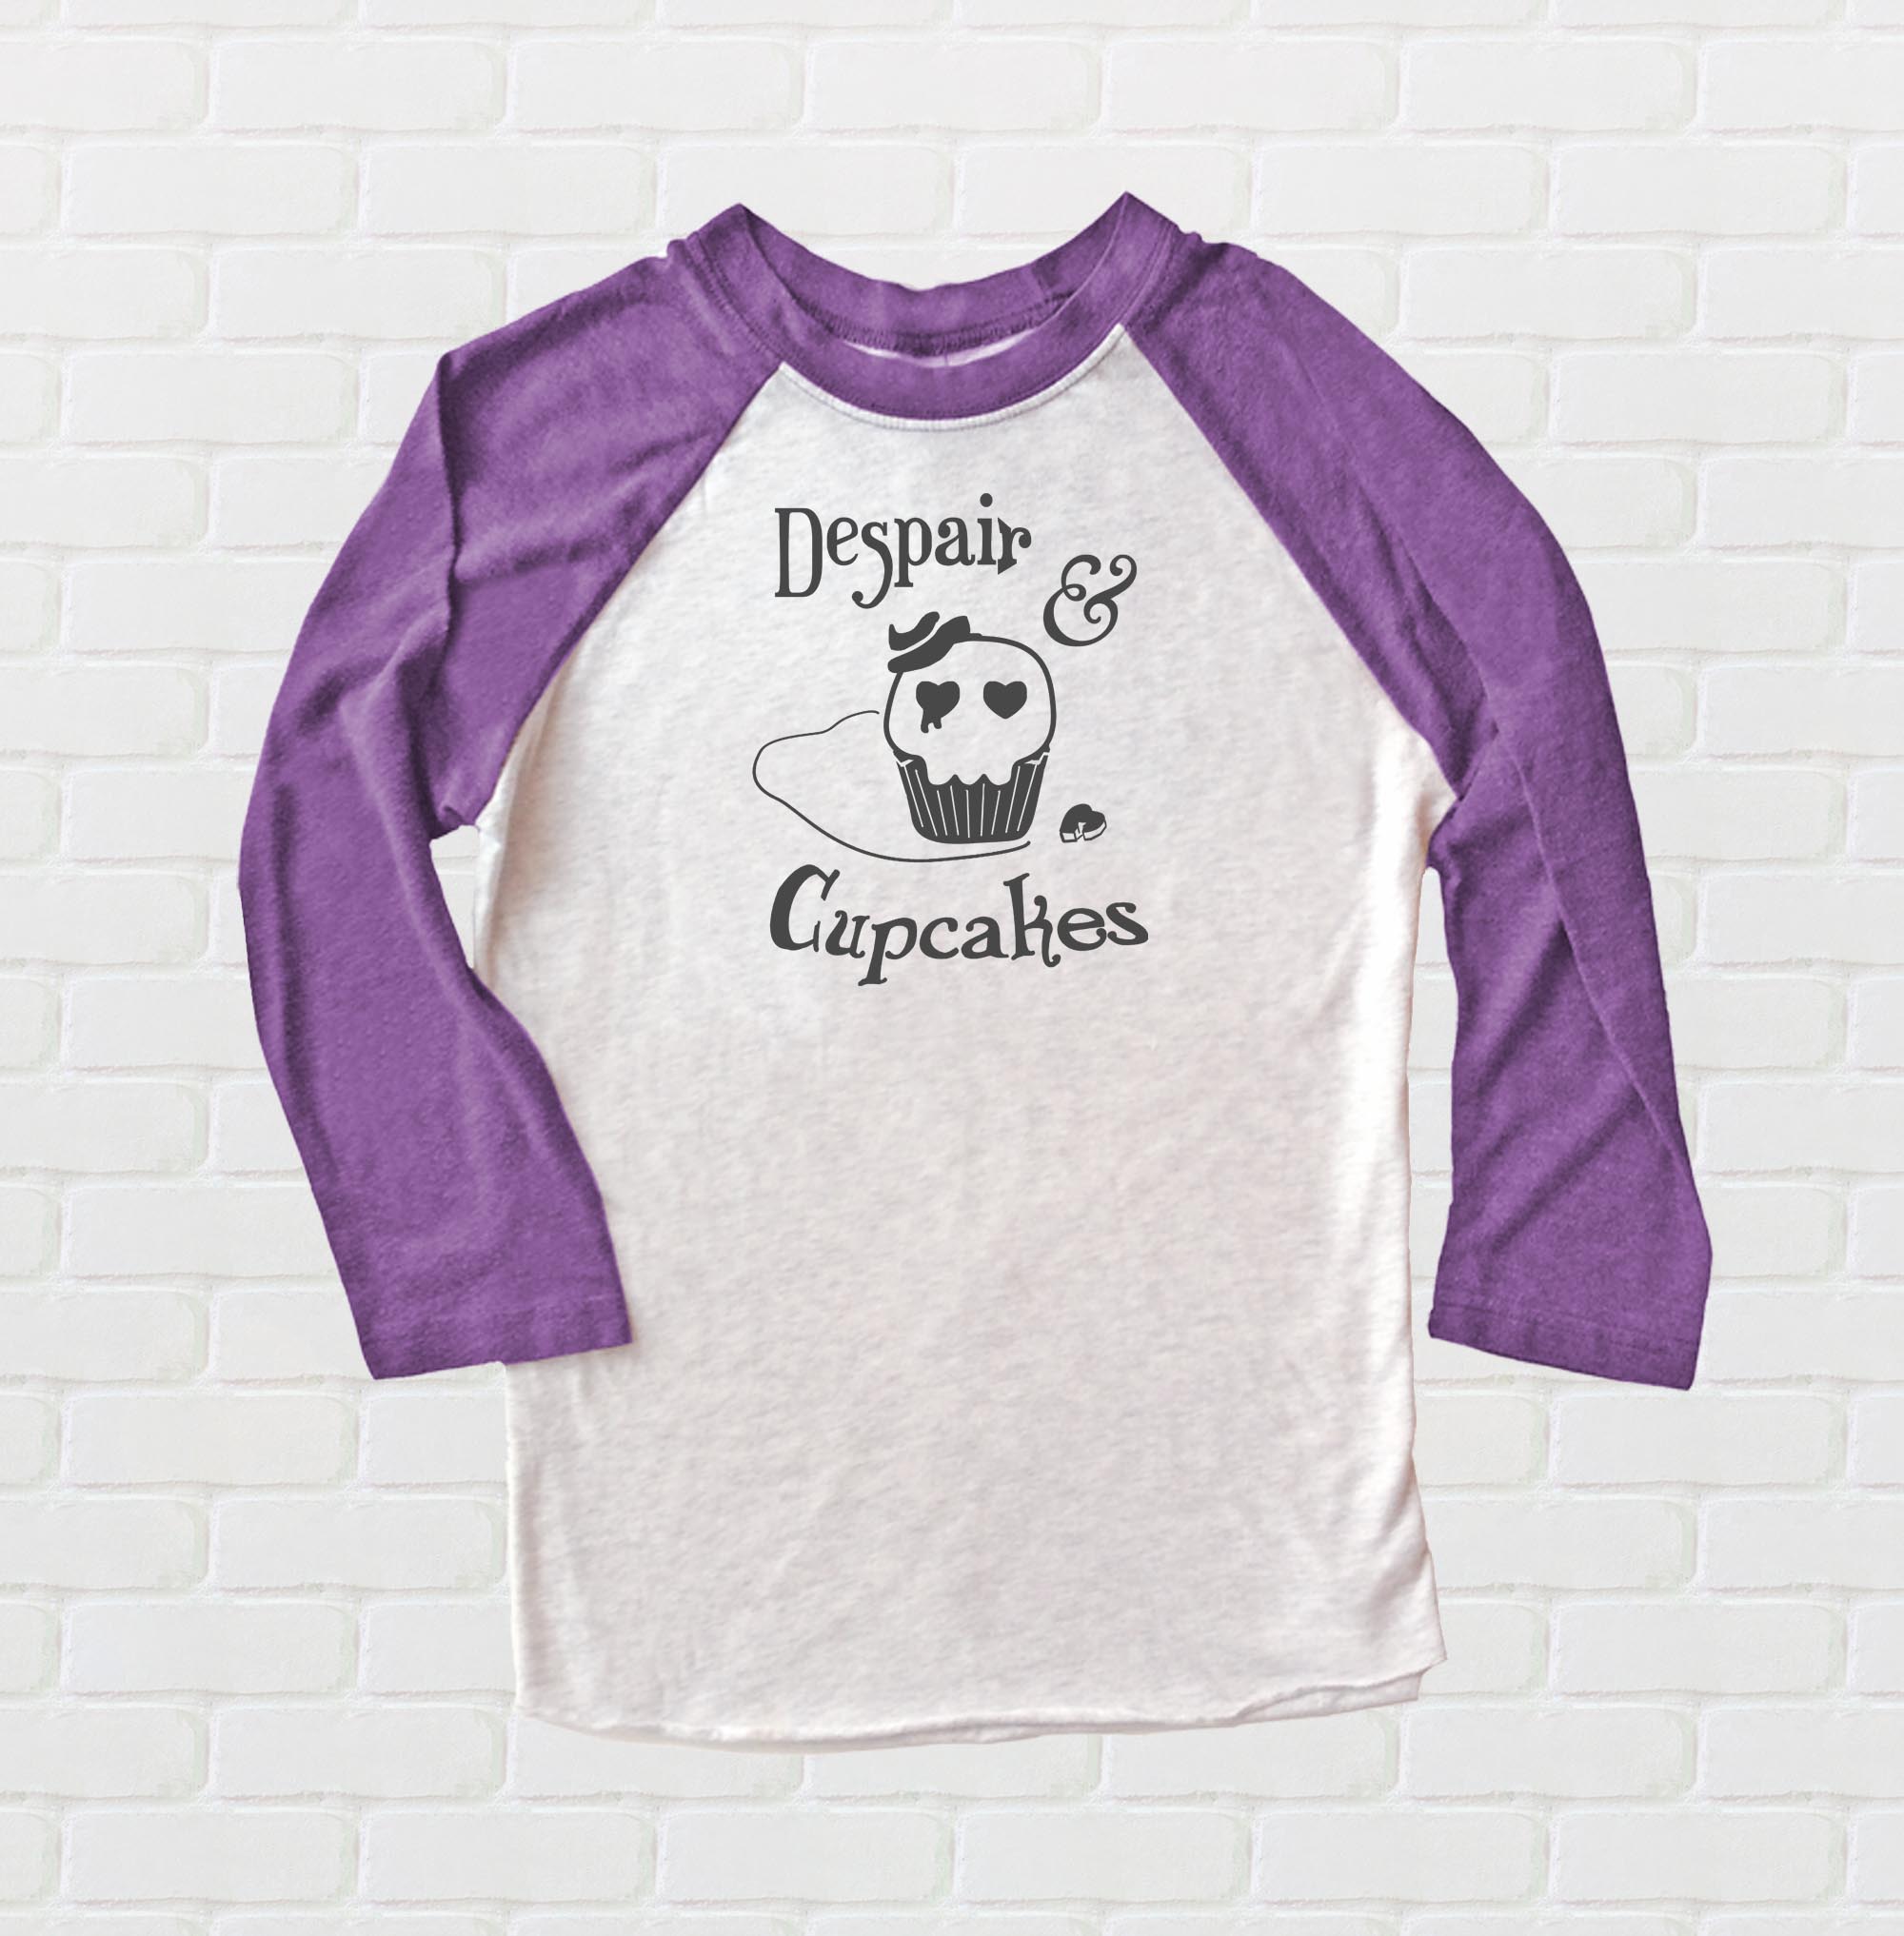 Despair and Cupcakes Raglan T-shirt 3/4 Sleeve - Purple/White